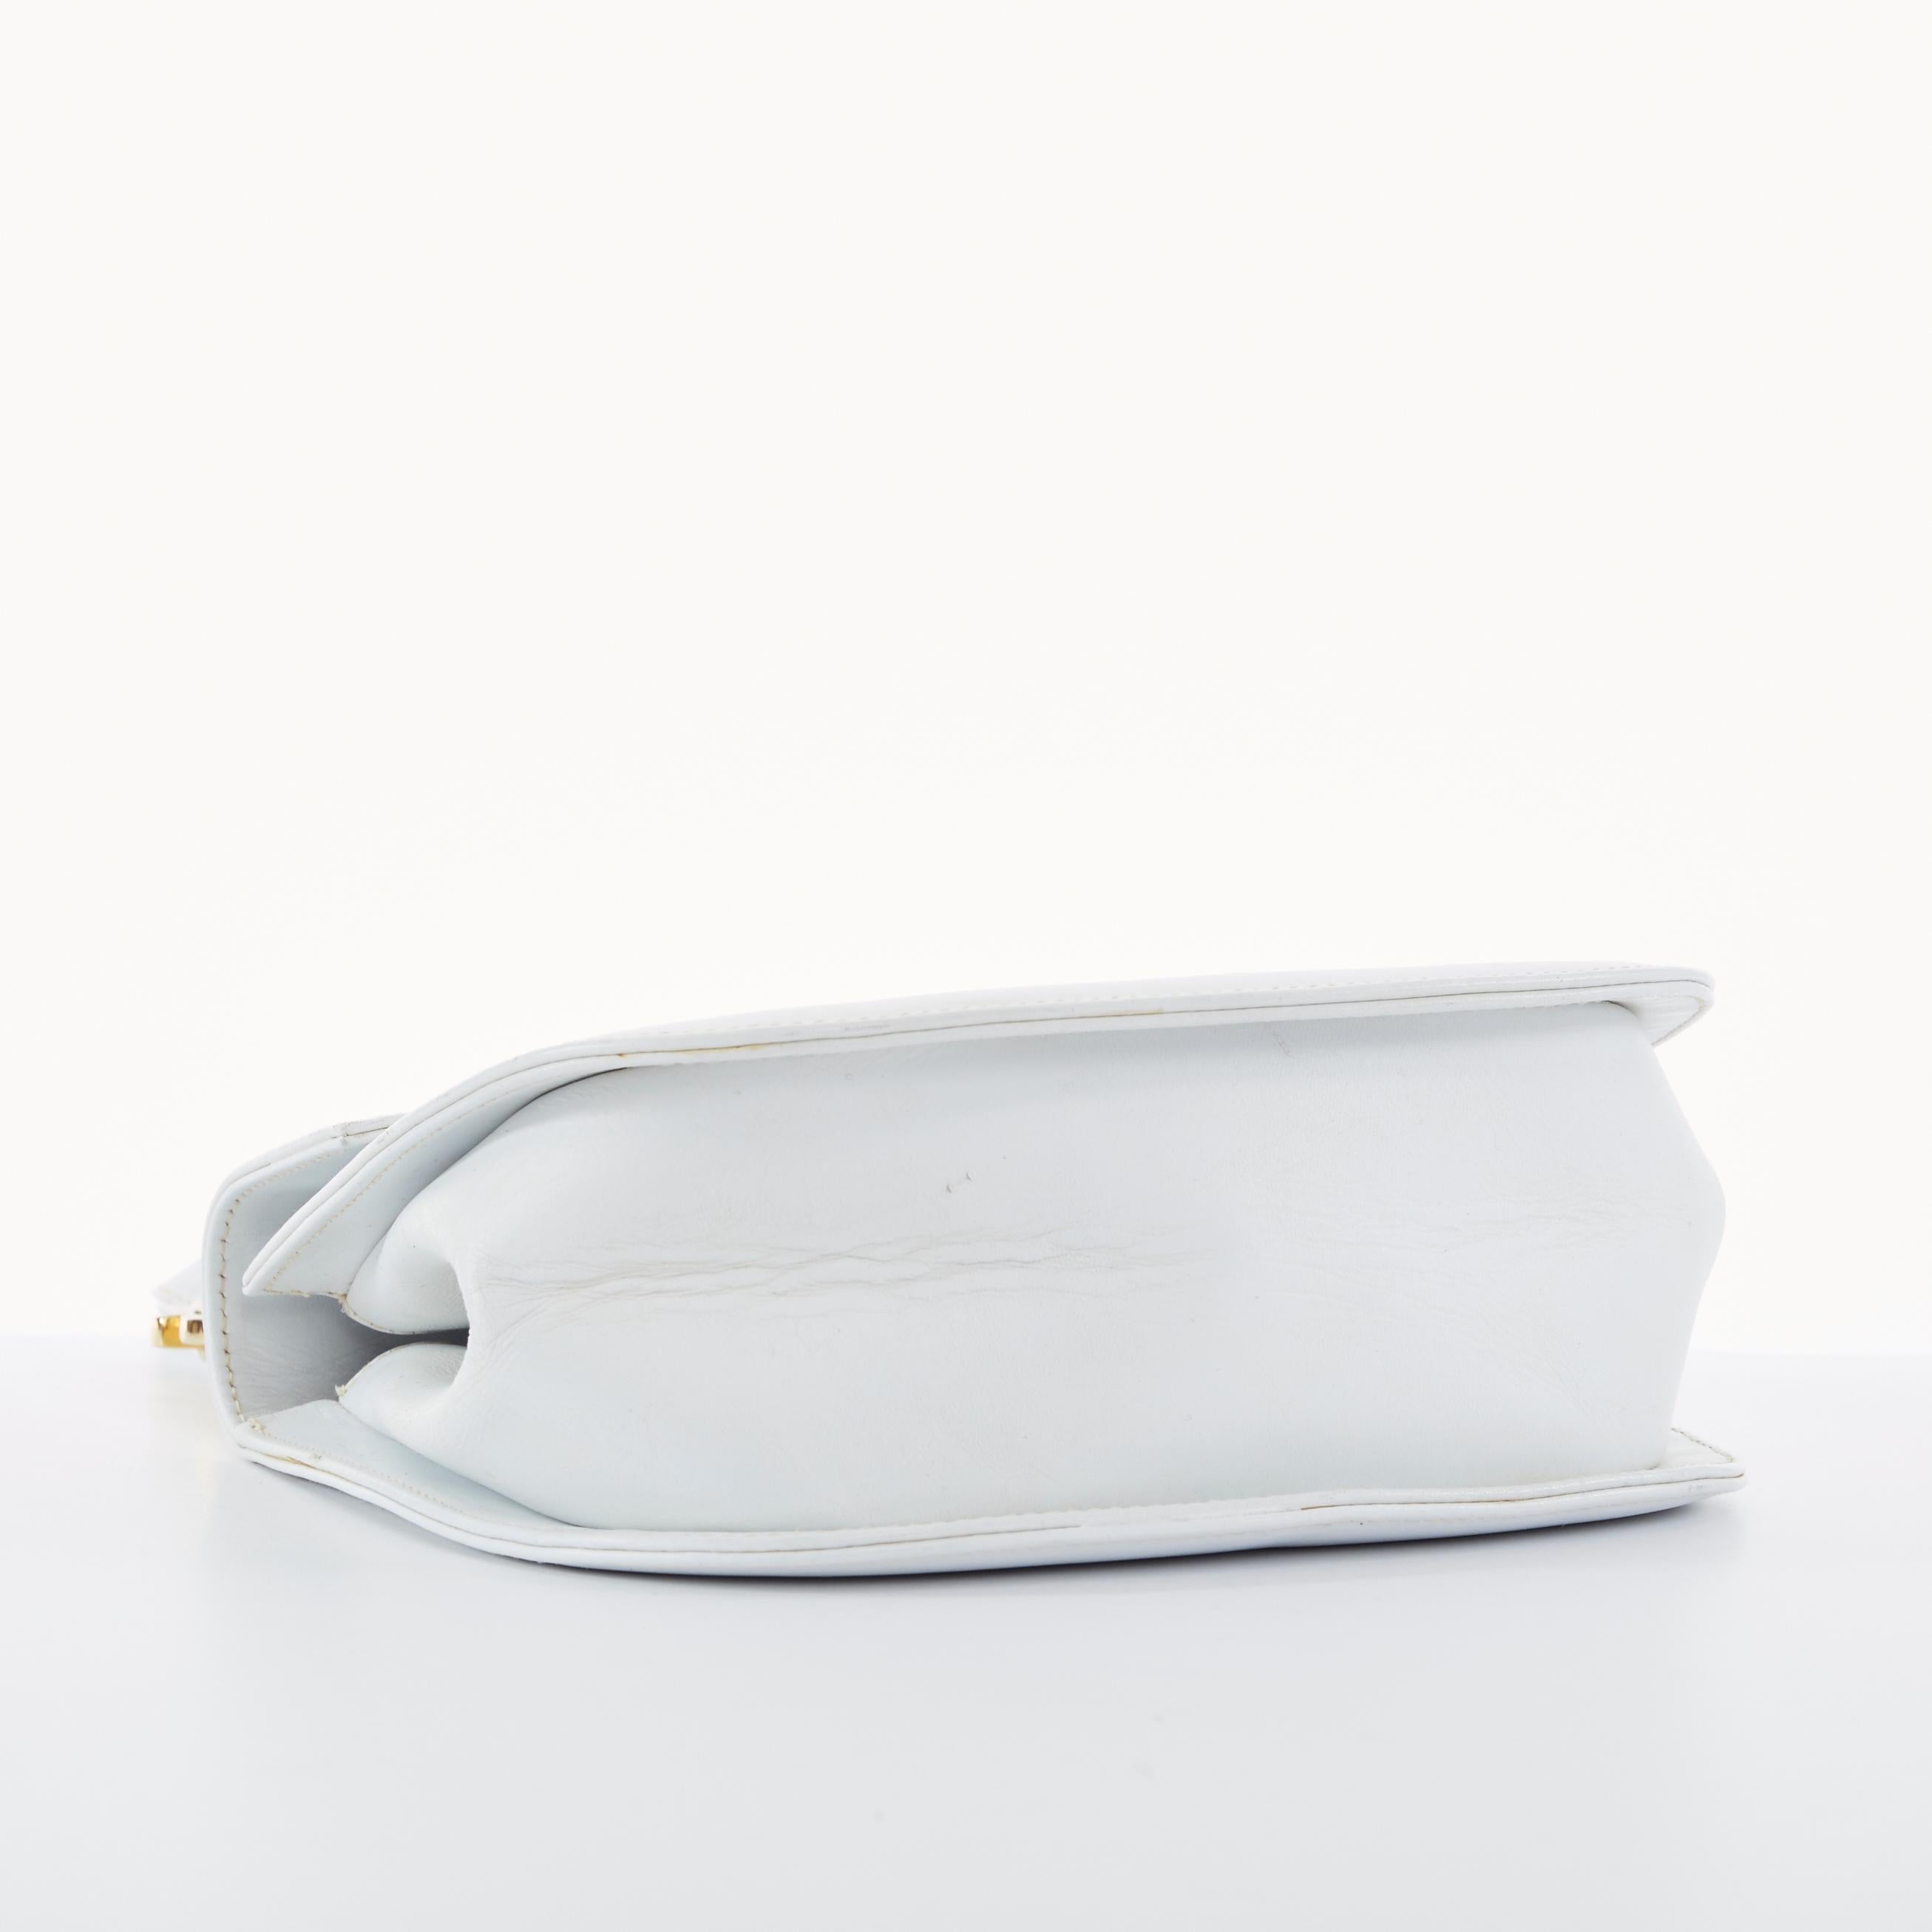 Gray SALVATORE FERRAGAMO white leather gold hardware flap front shoulder satchel bag